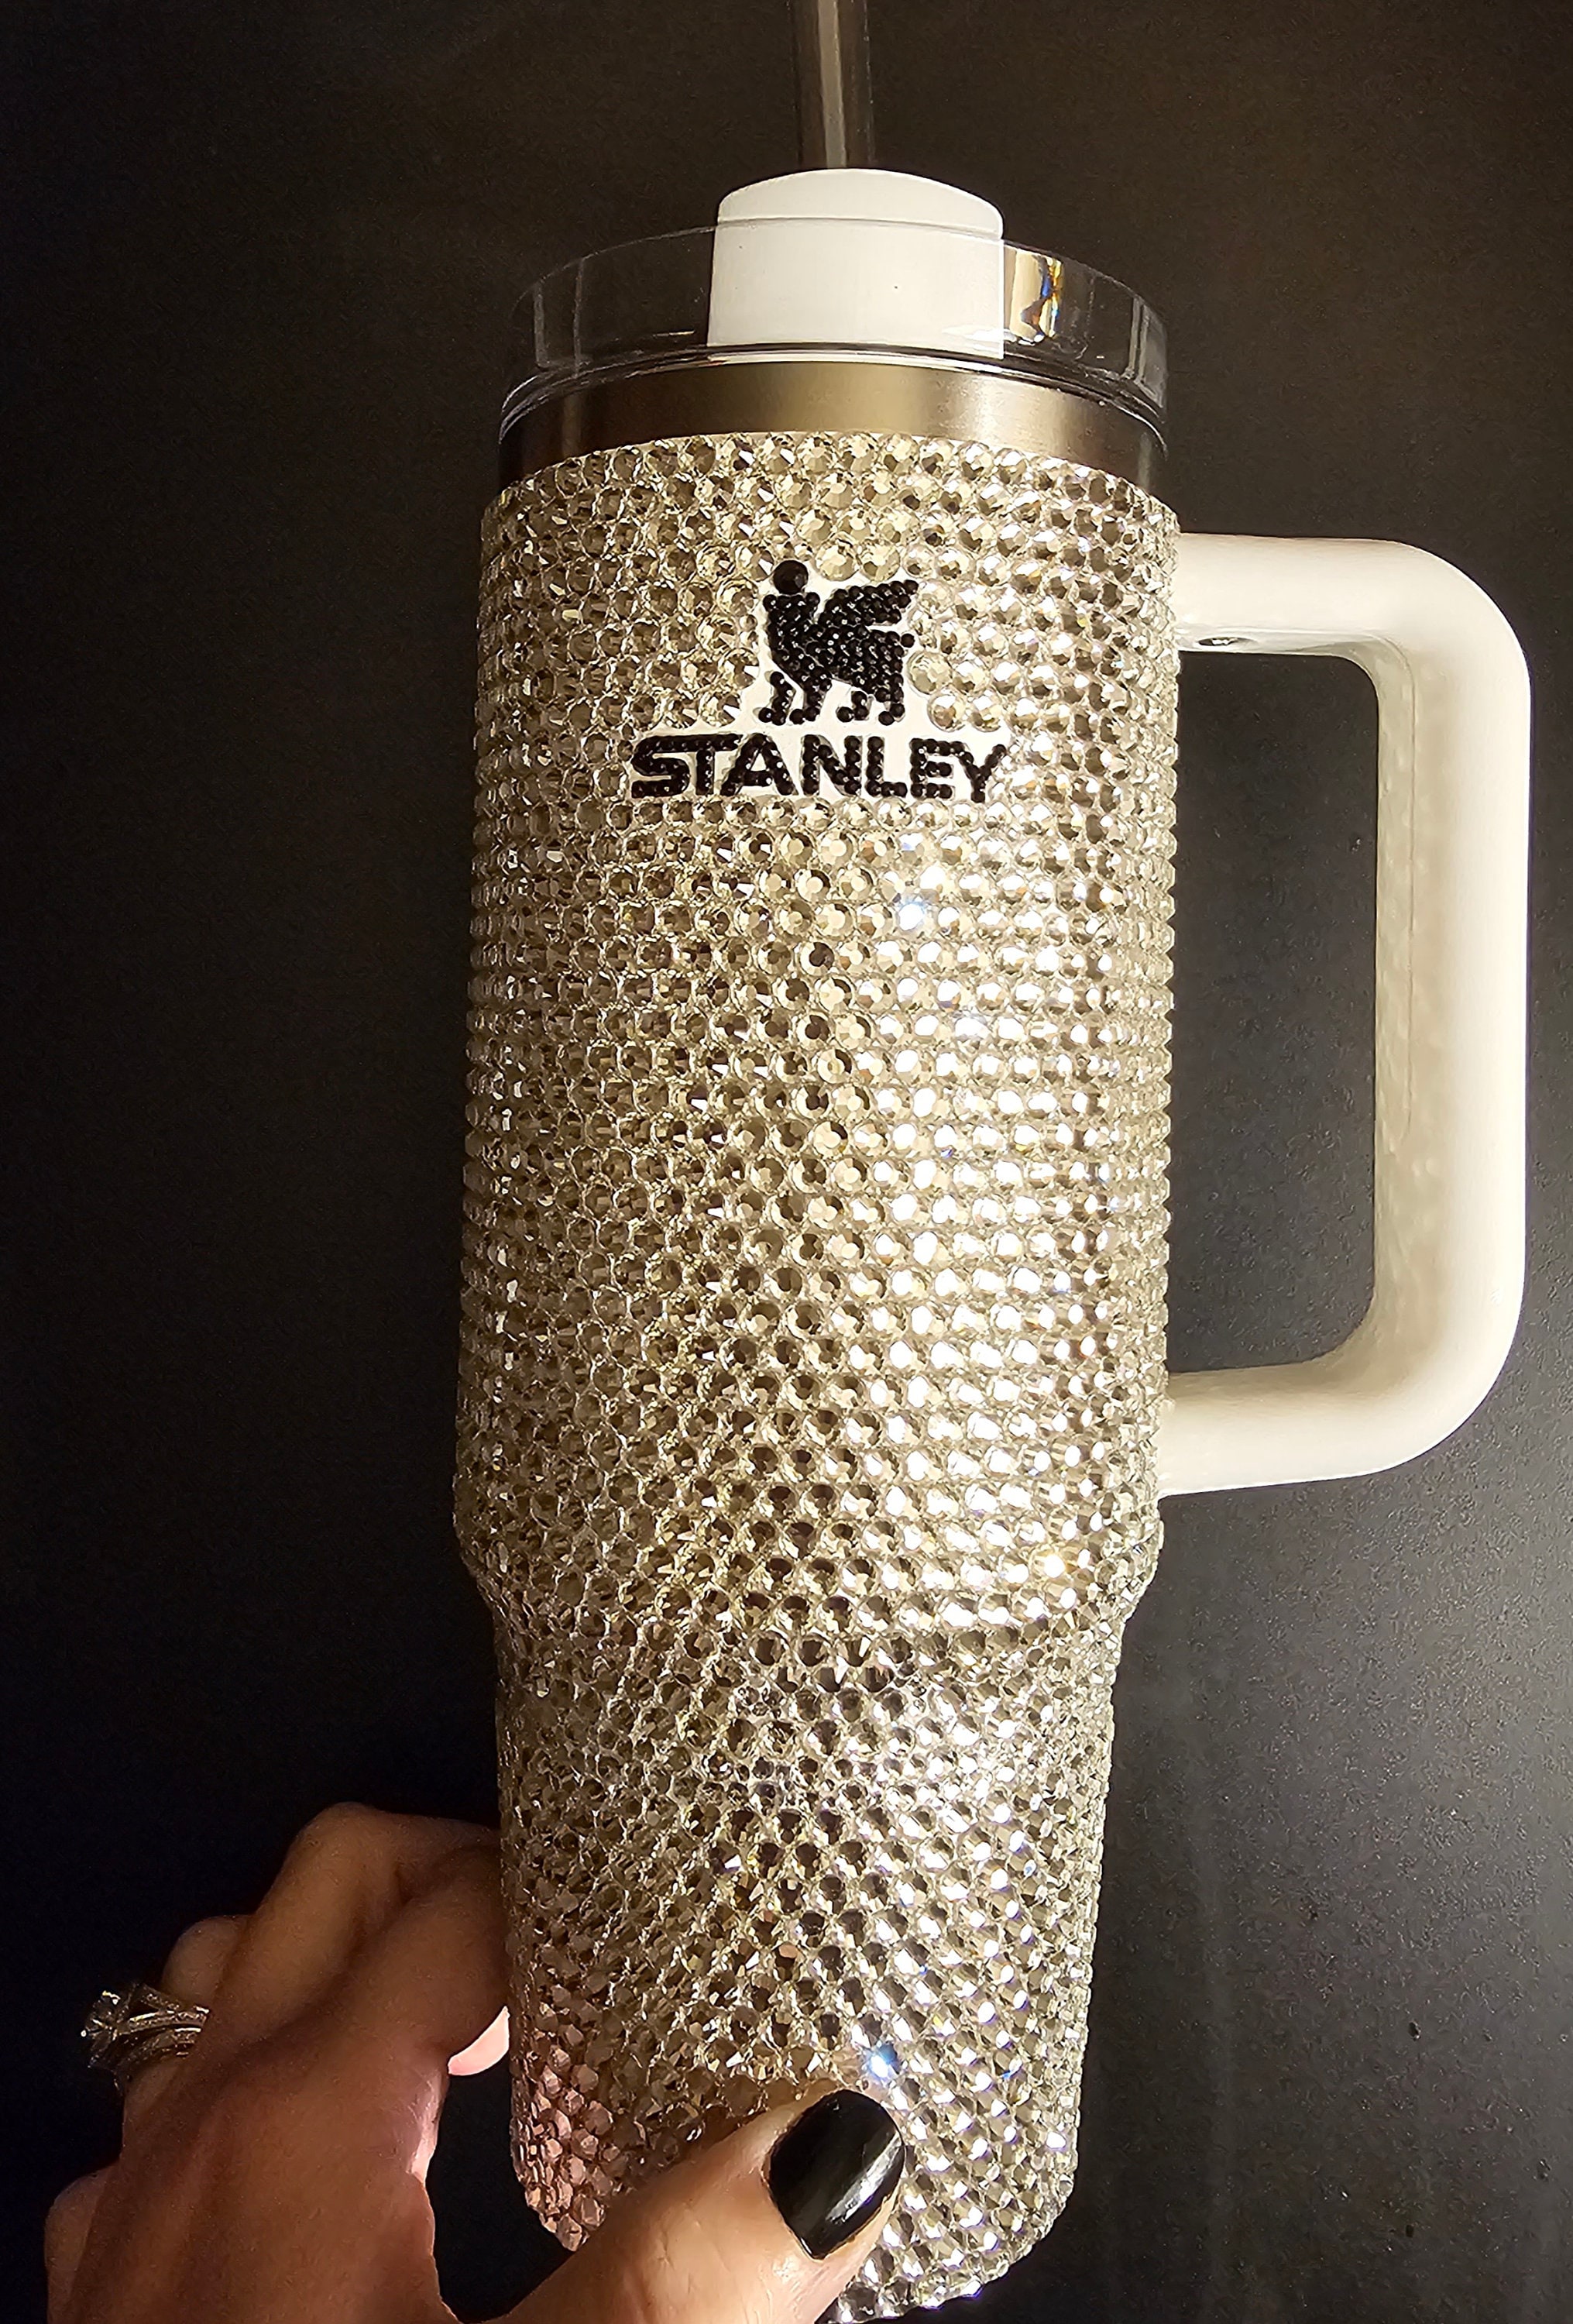 Black Rhinestone Stanley Tumbler Cup, Custom Bling 40 Oz Cold Cup, Bling  Stanley Tumbler, Coffee Lover Gift, Iced Coffee Tumbler 